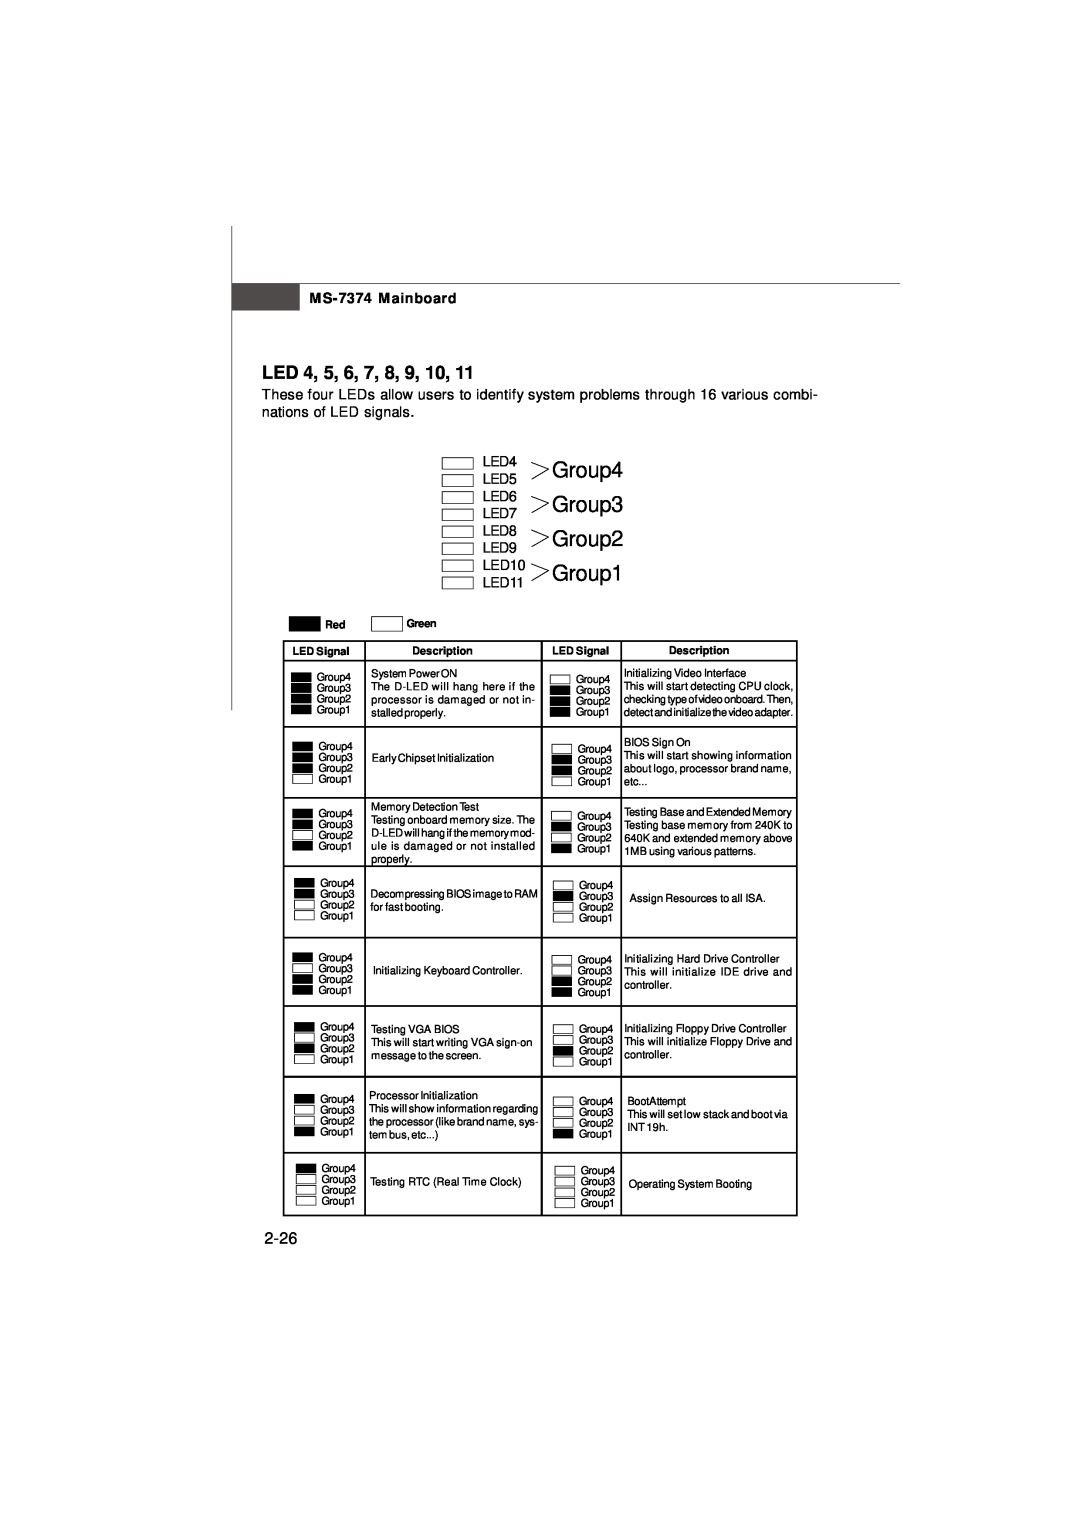 Nvidia manual LED 4, 5, 6, 7, 8, 9, 10, 2-26, Group4 Group3 Group2 Group1, MS-7374 Mainboard 